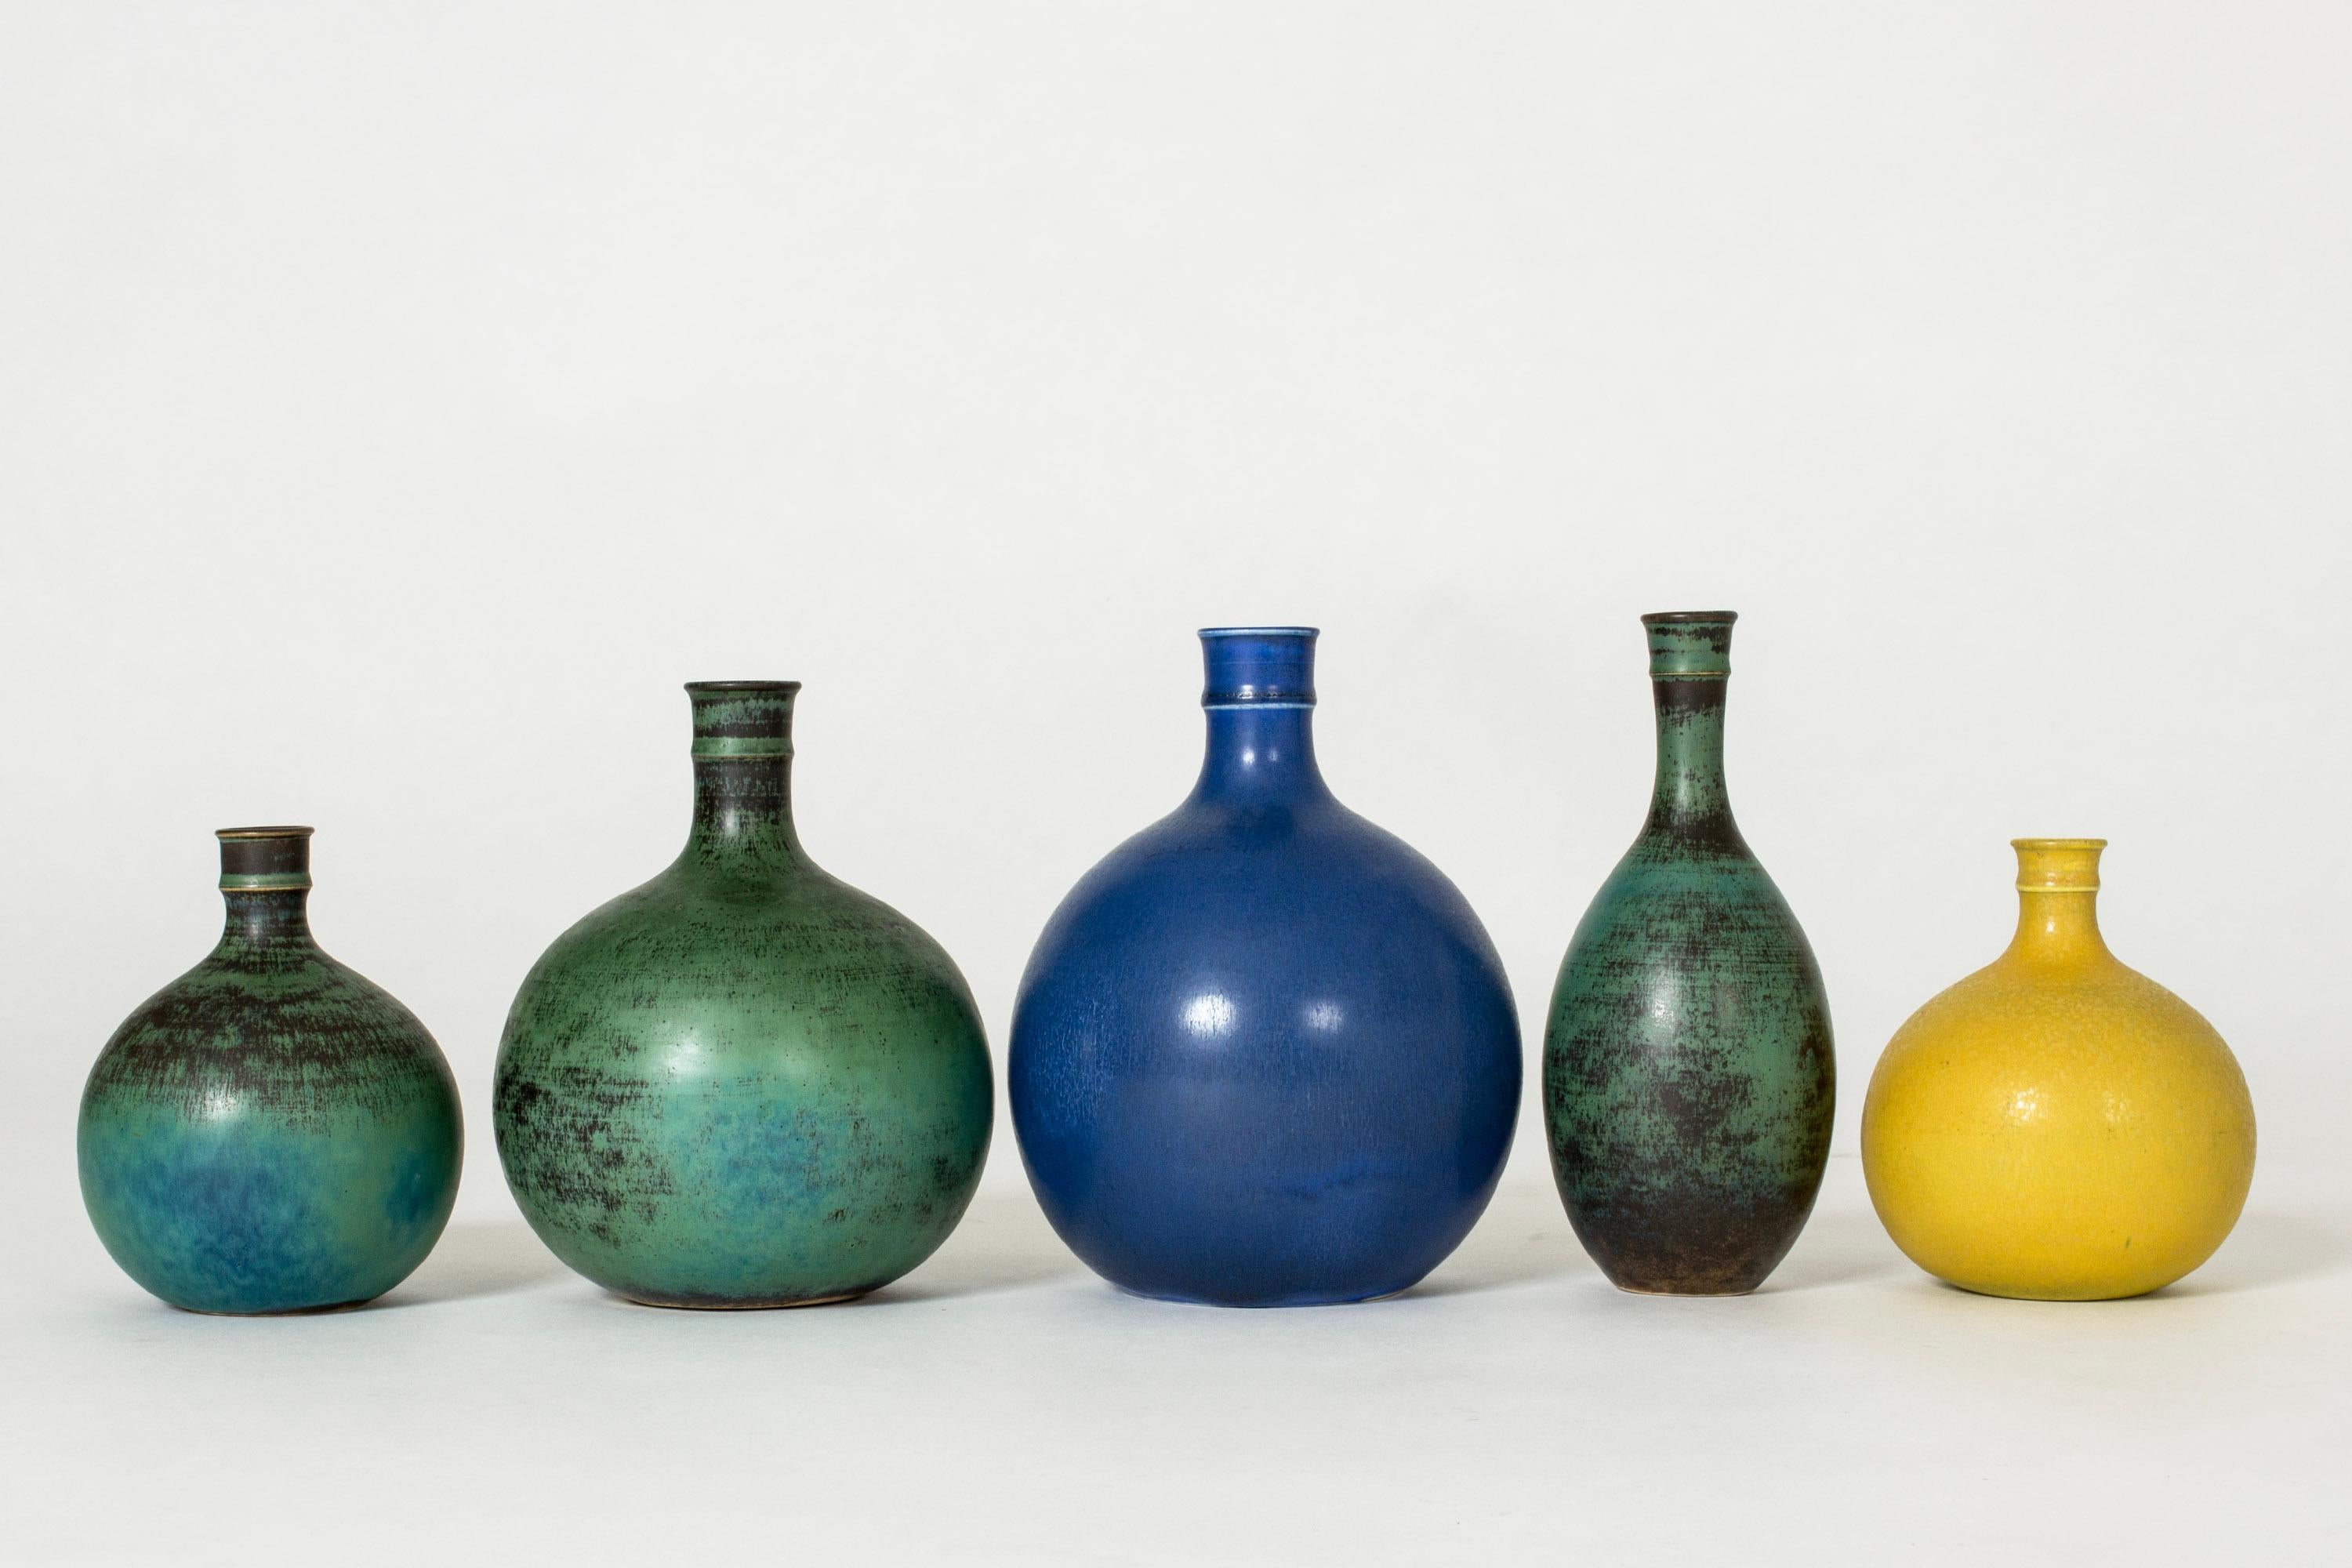 Scandinavian Modern Midcentury Stoneware Vases by Stig Lindberg, Gustavsberg, Sweden, 1960s For Sale